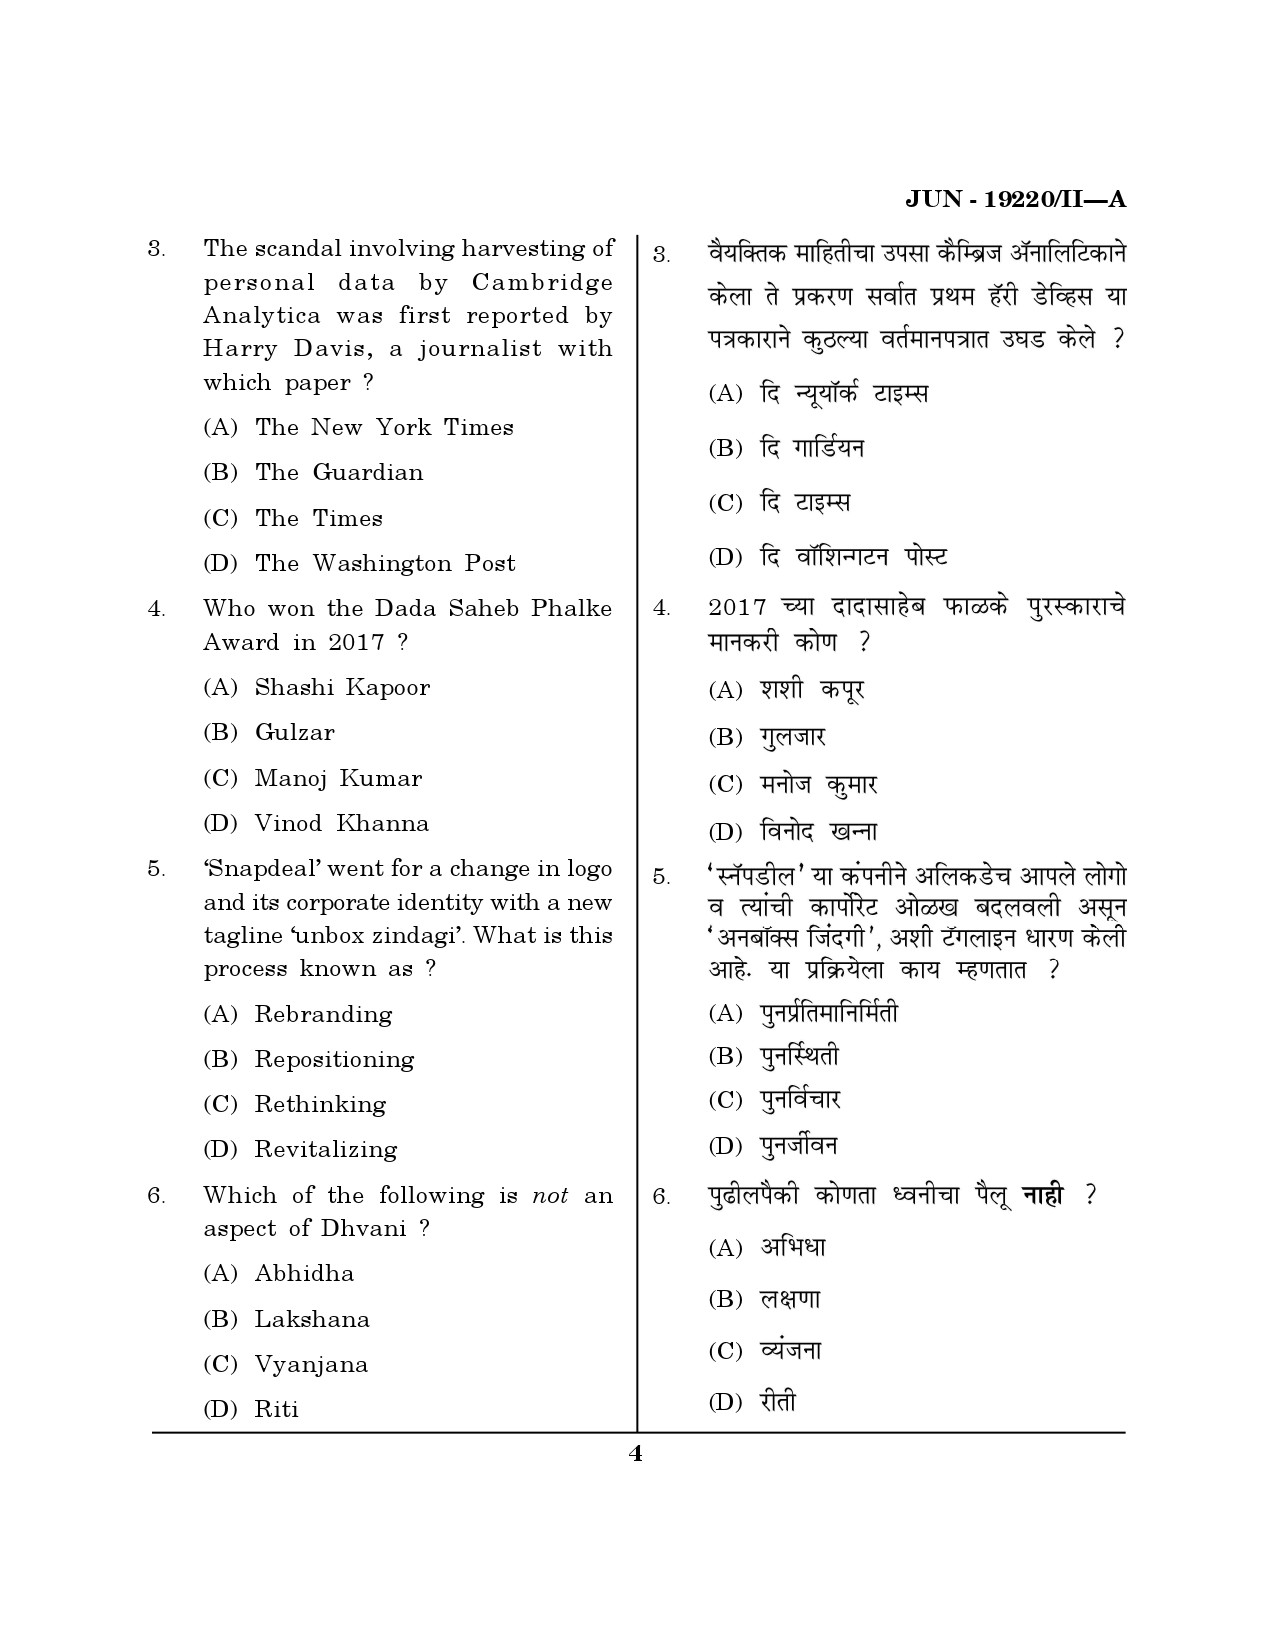 Maharashtra SET Journalism and Mass Communication Question Paper II June 2020 3